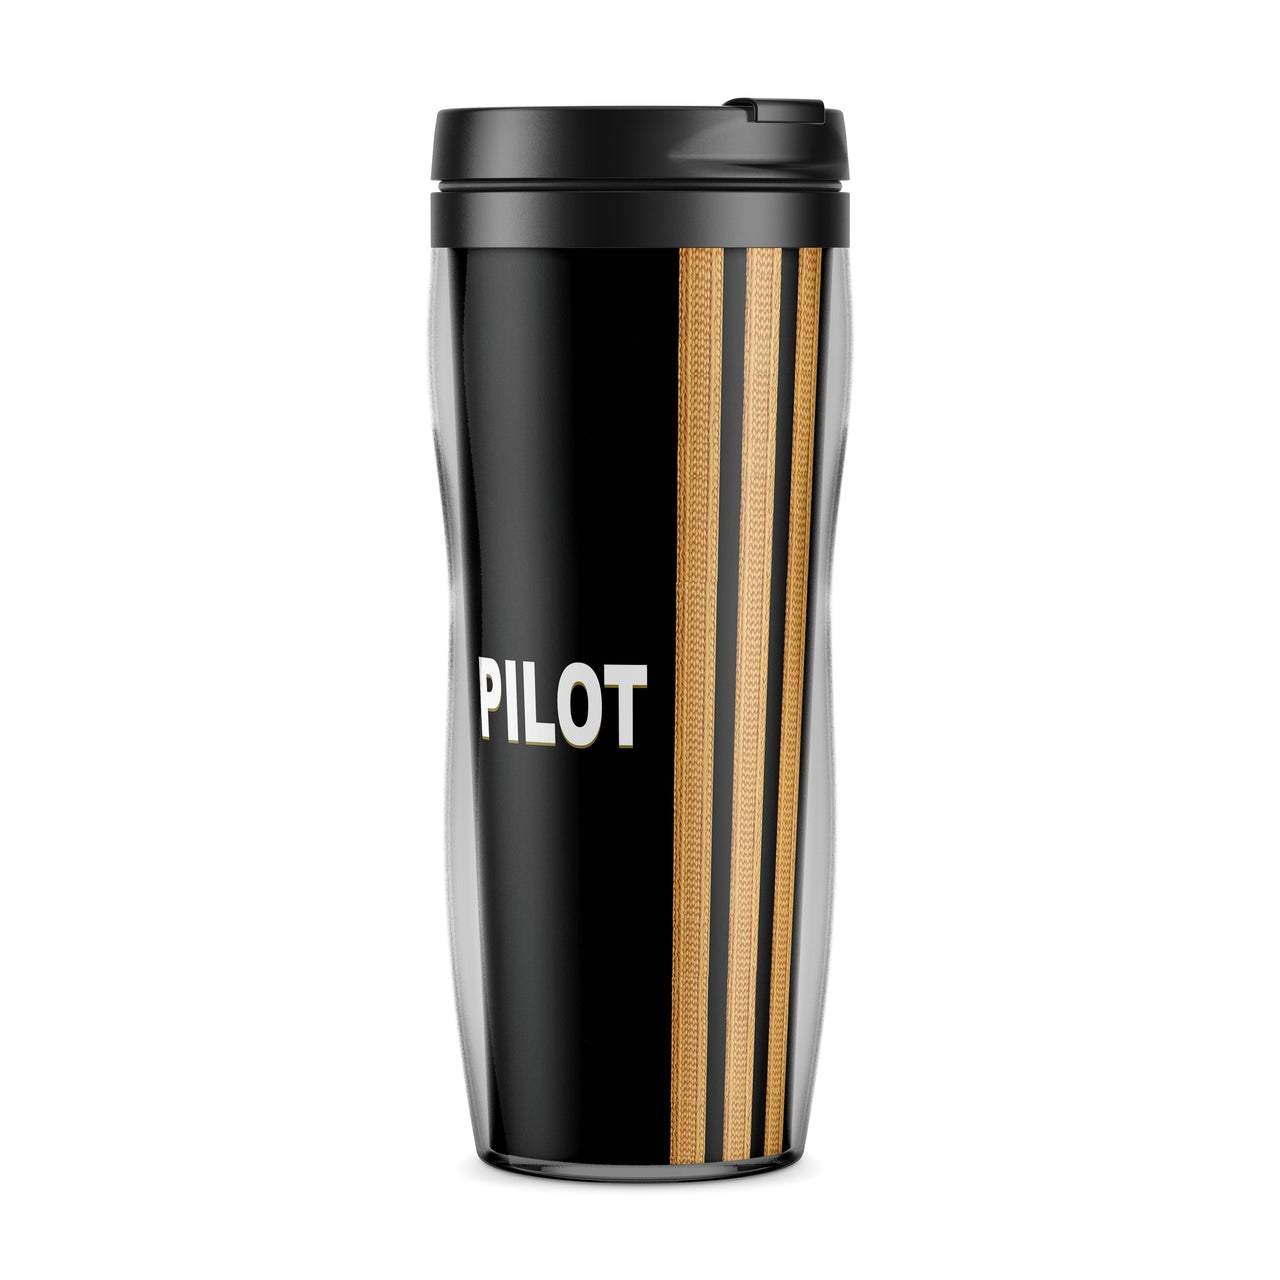 PILOT & Special Golden Epaulettes (4,3,2 Lines) Designed Travel Mugs